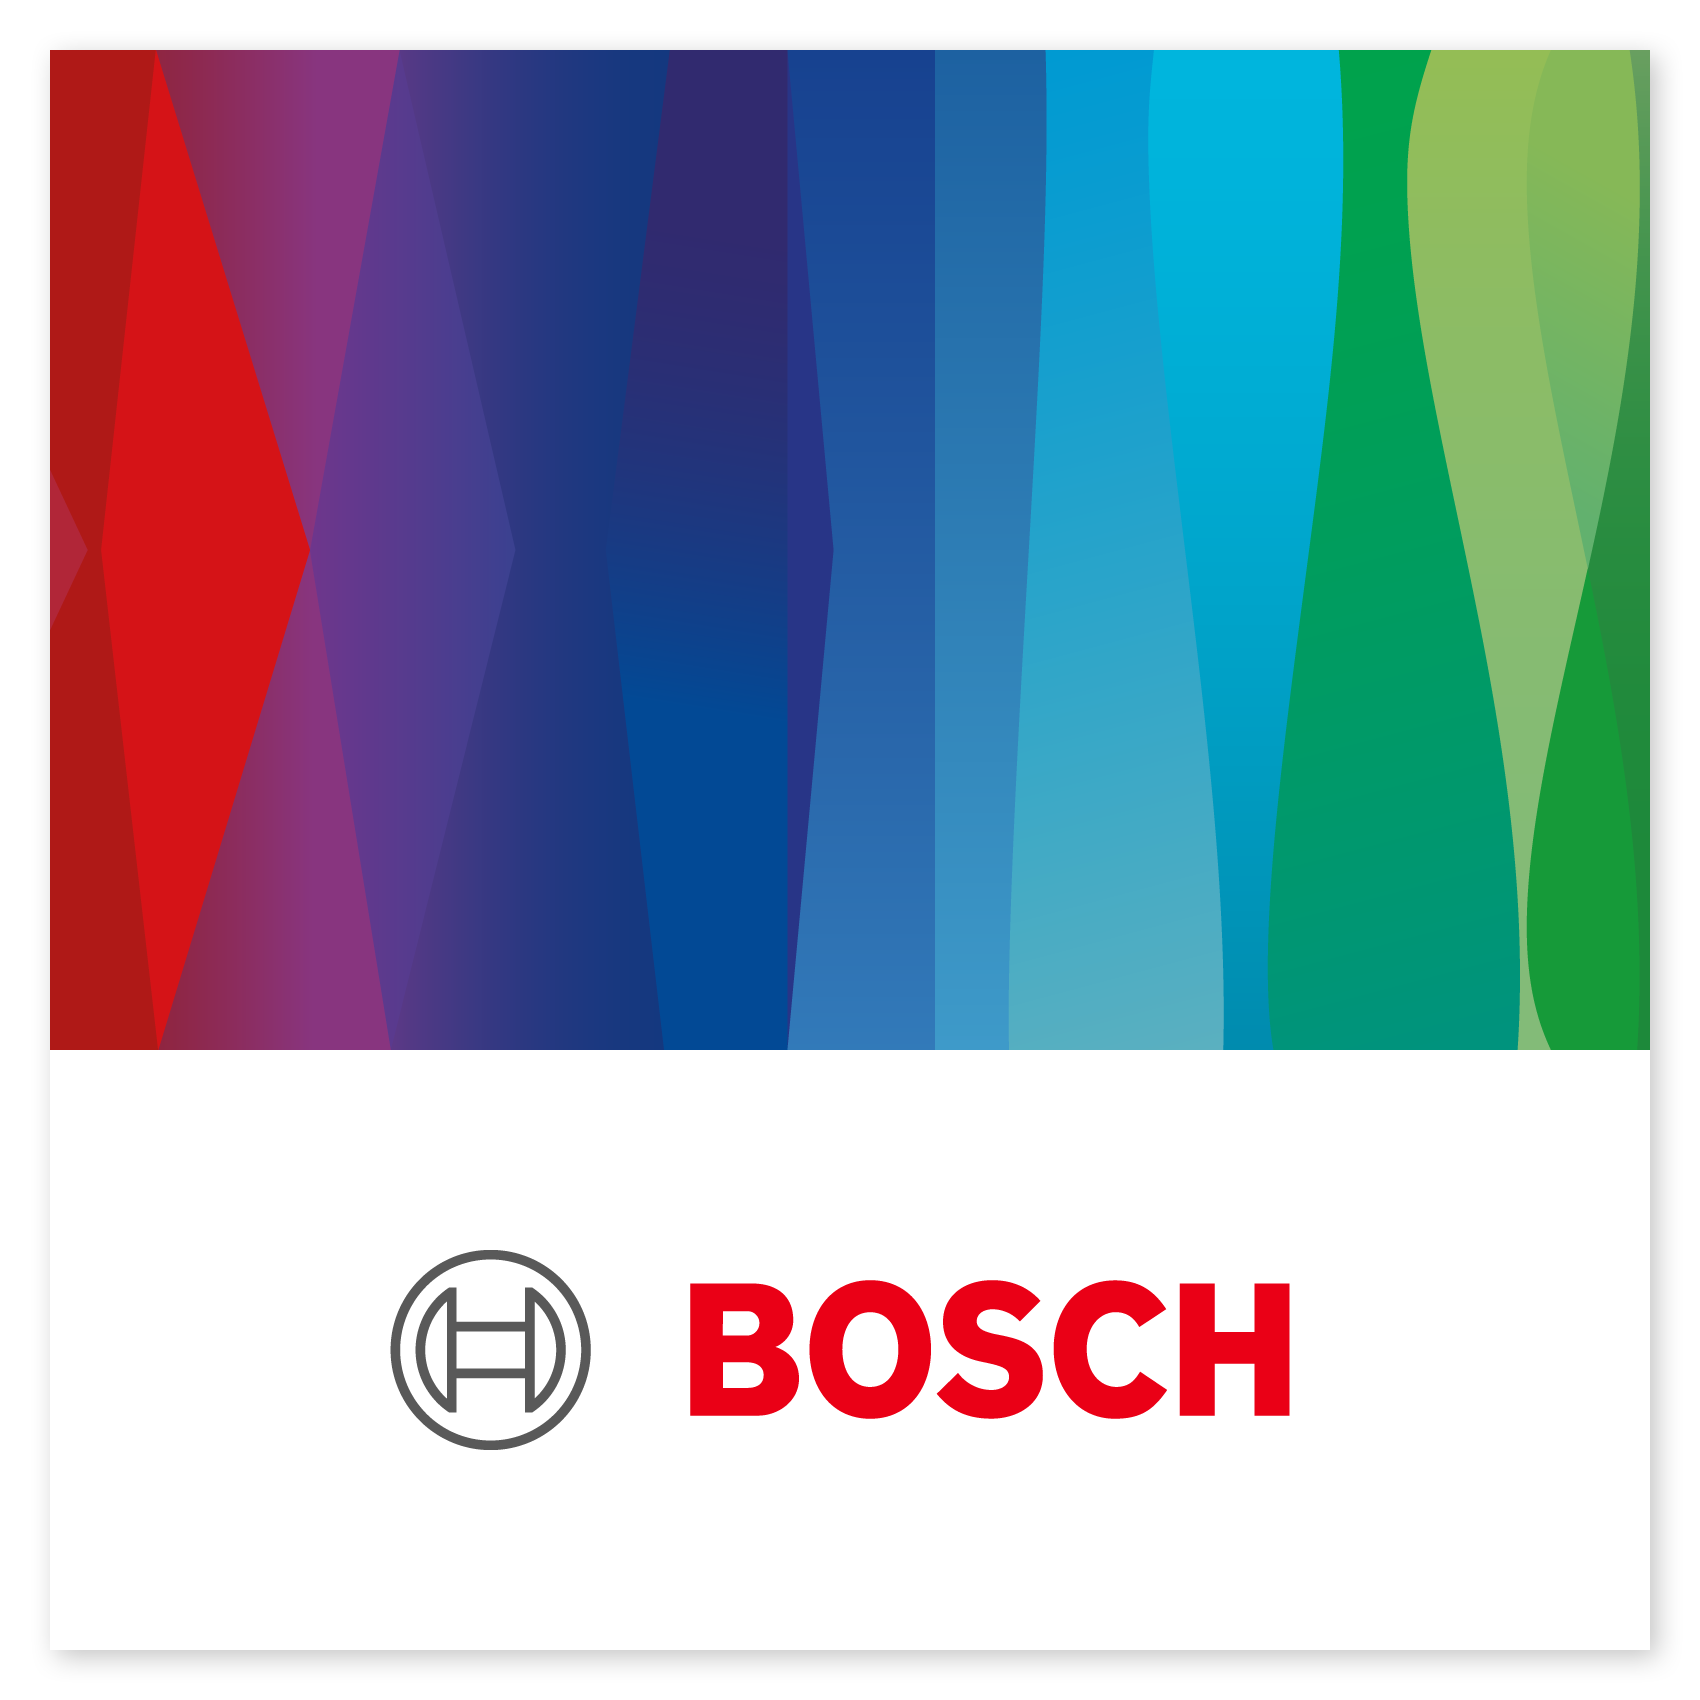 Bosch Australia Manufacturing Solutions